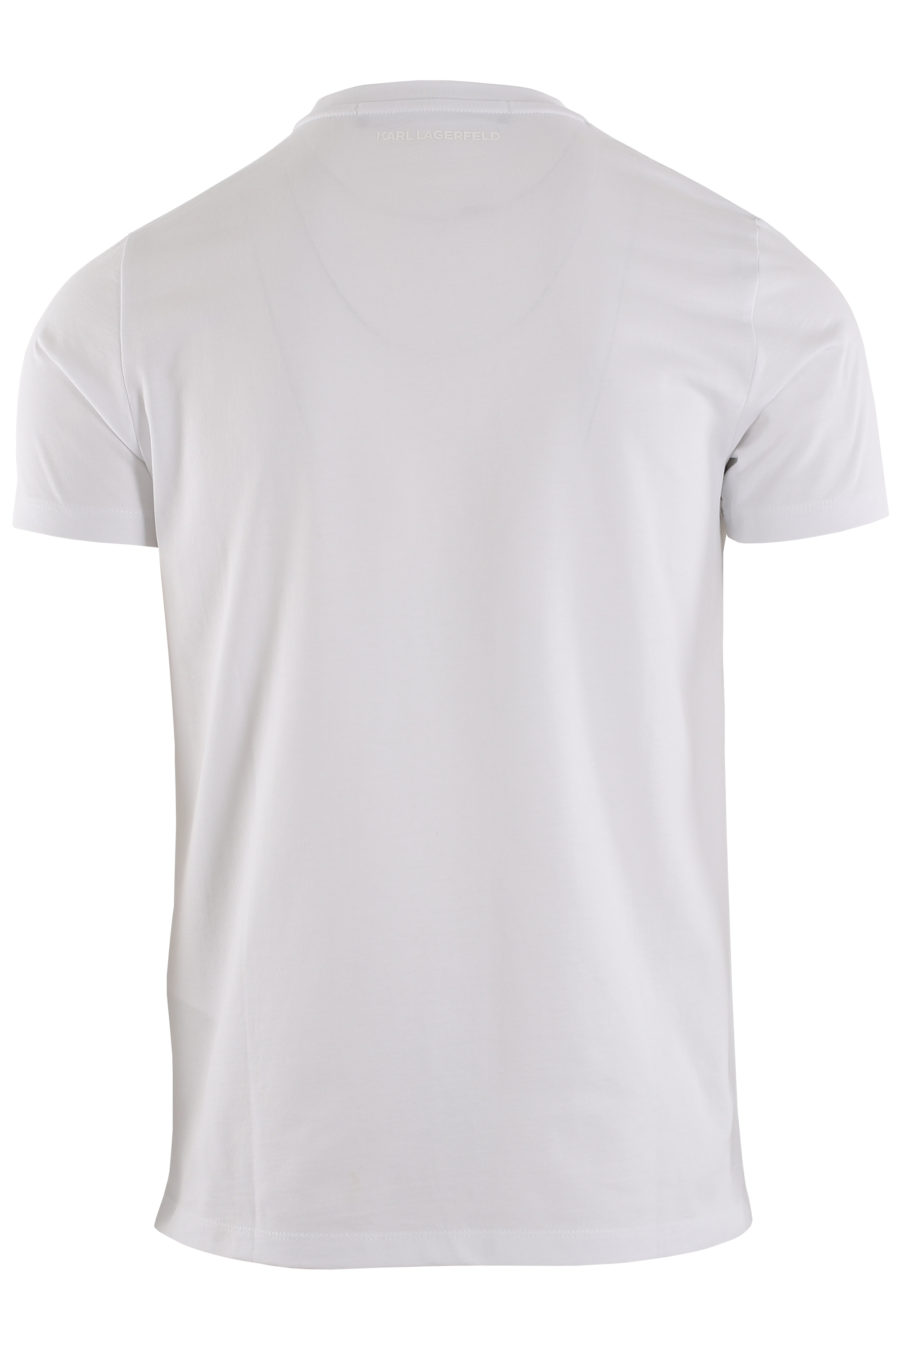 Camiseta blanca con logo azul multicolor - IMG 0429